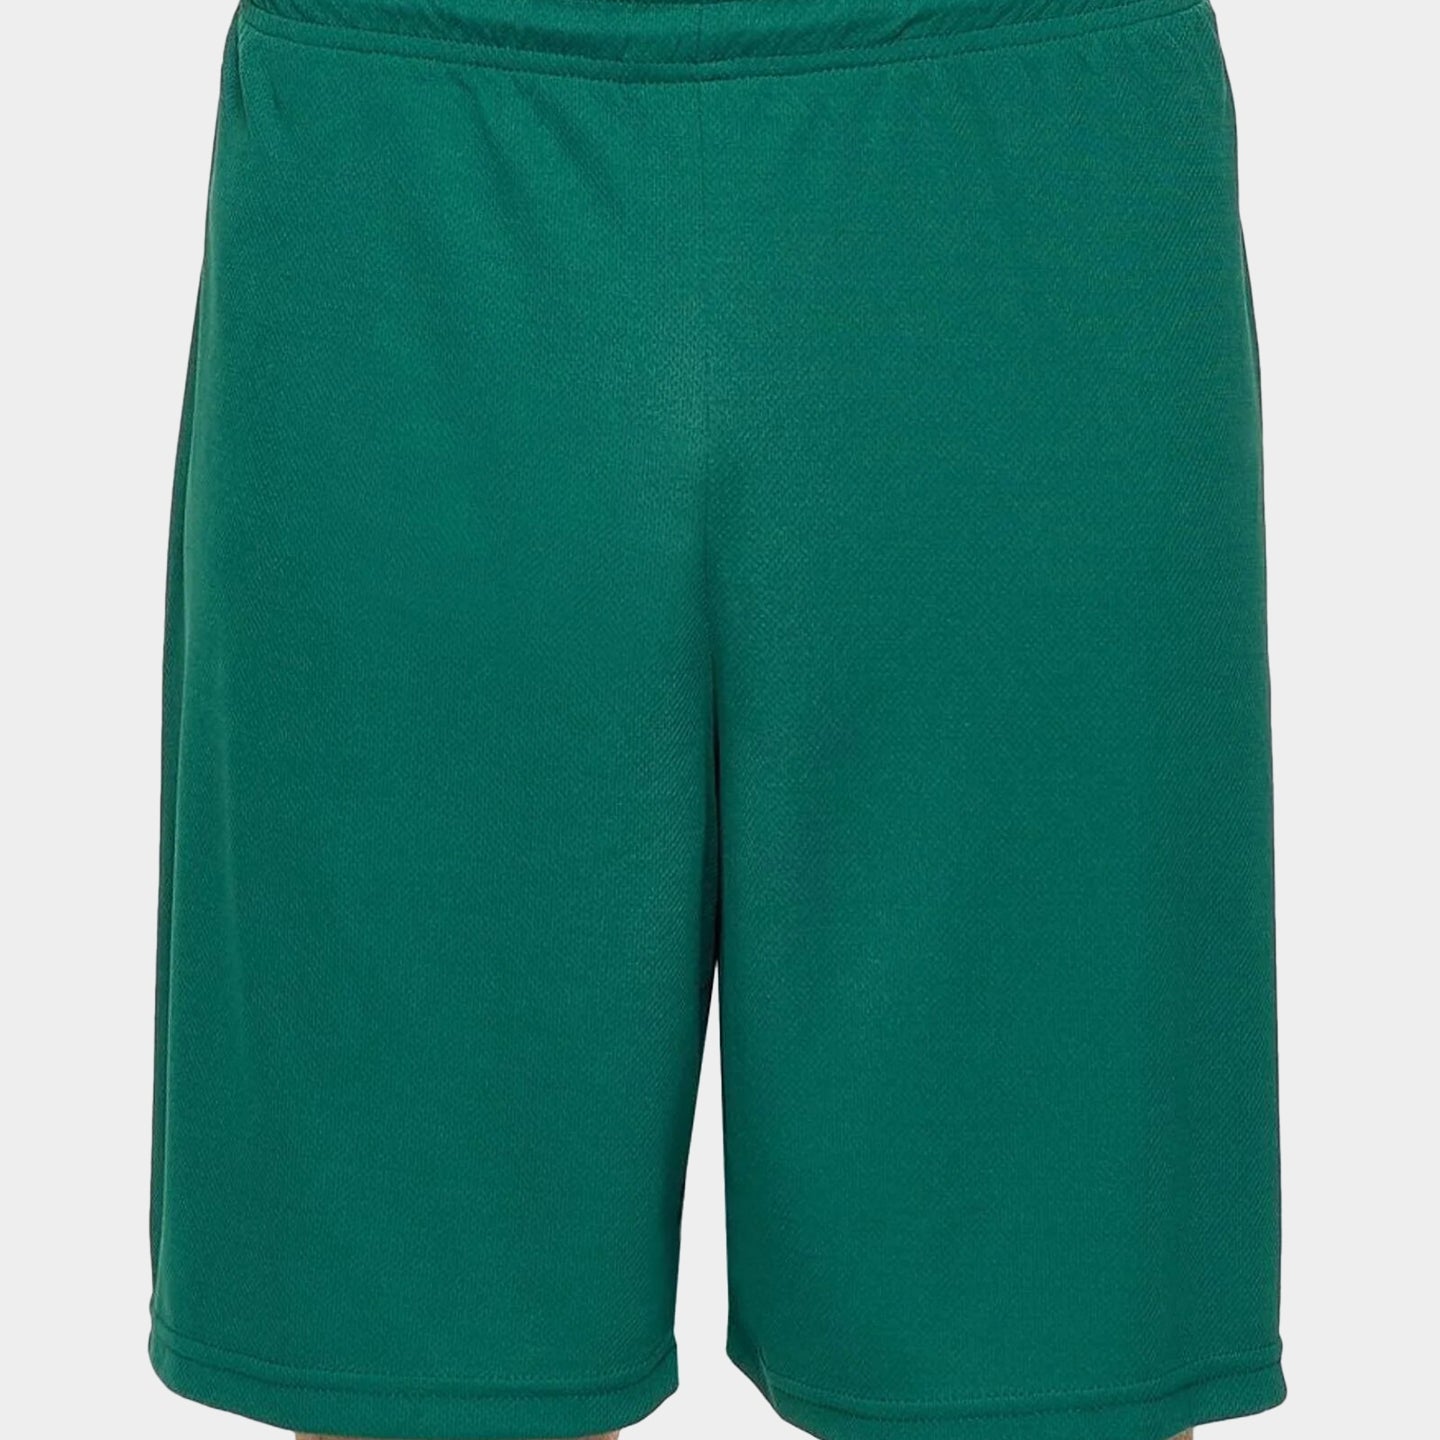 Expert Brand Oxymesh Men's Performance Training Shorts, XL, Forest Green A1